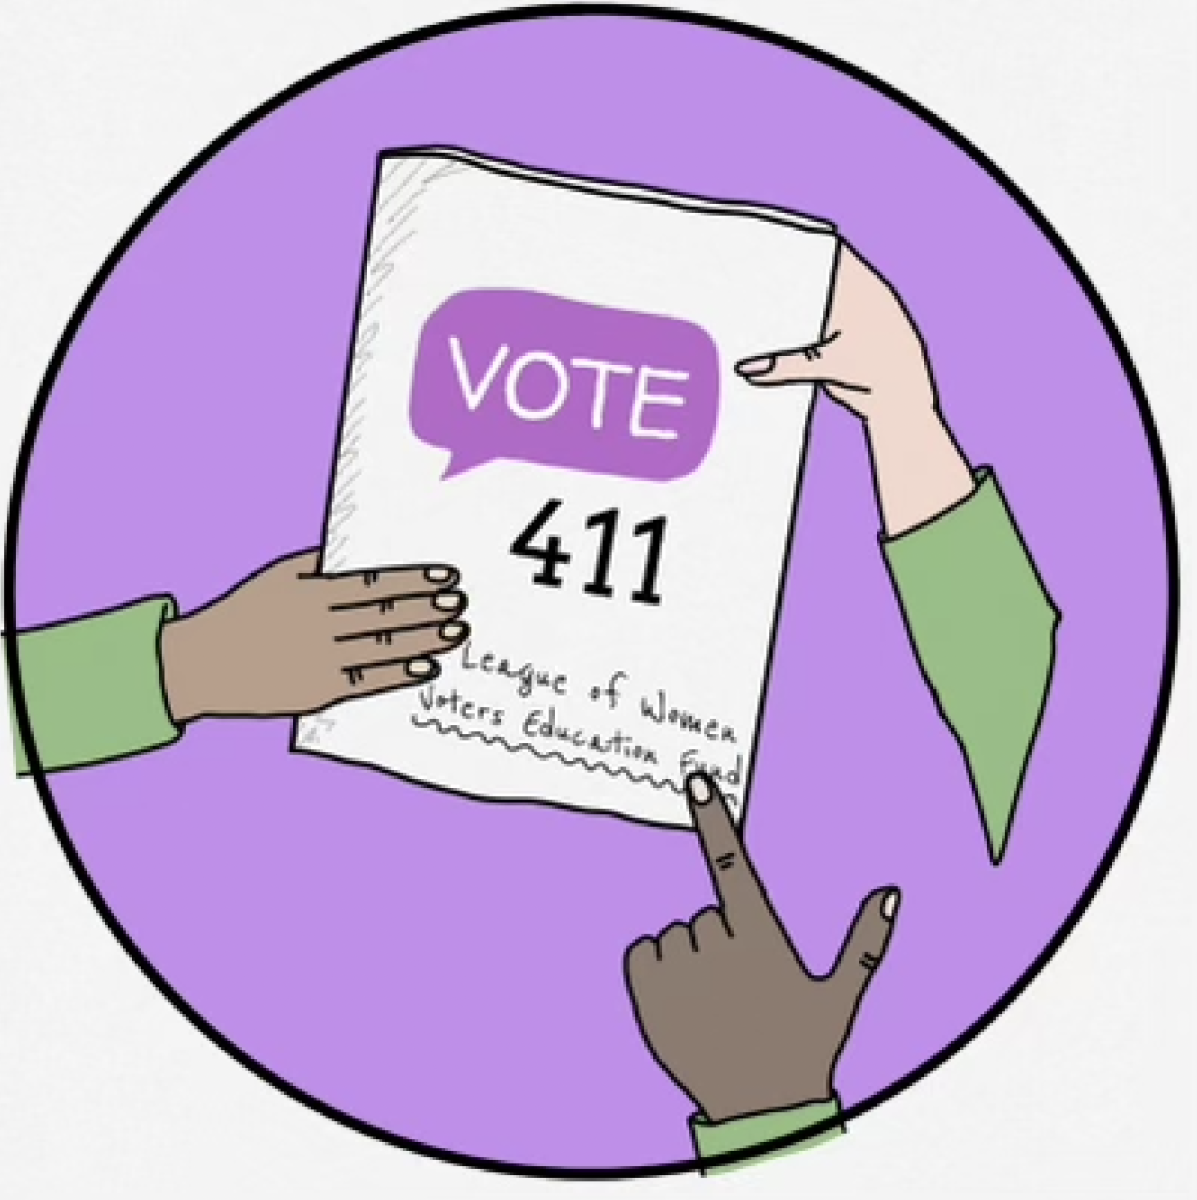 Vote411: A new voter platform in California